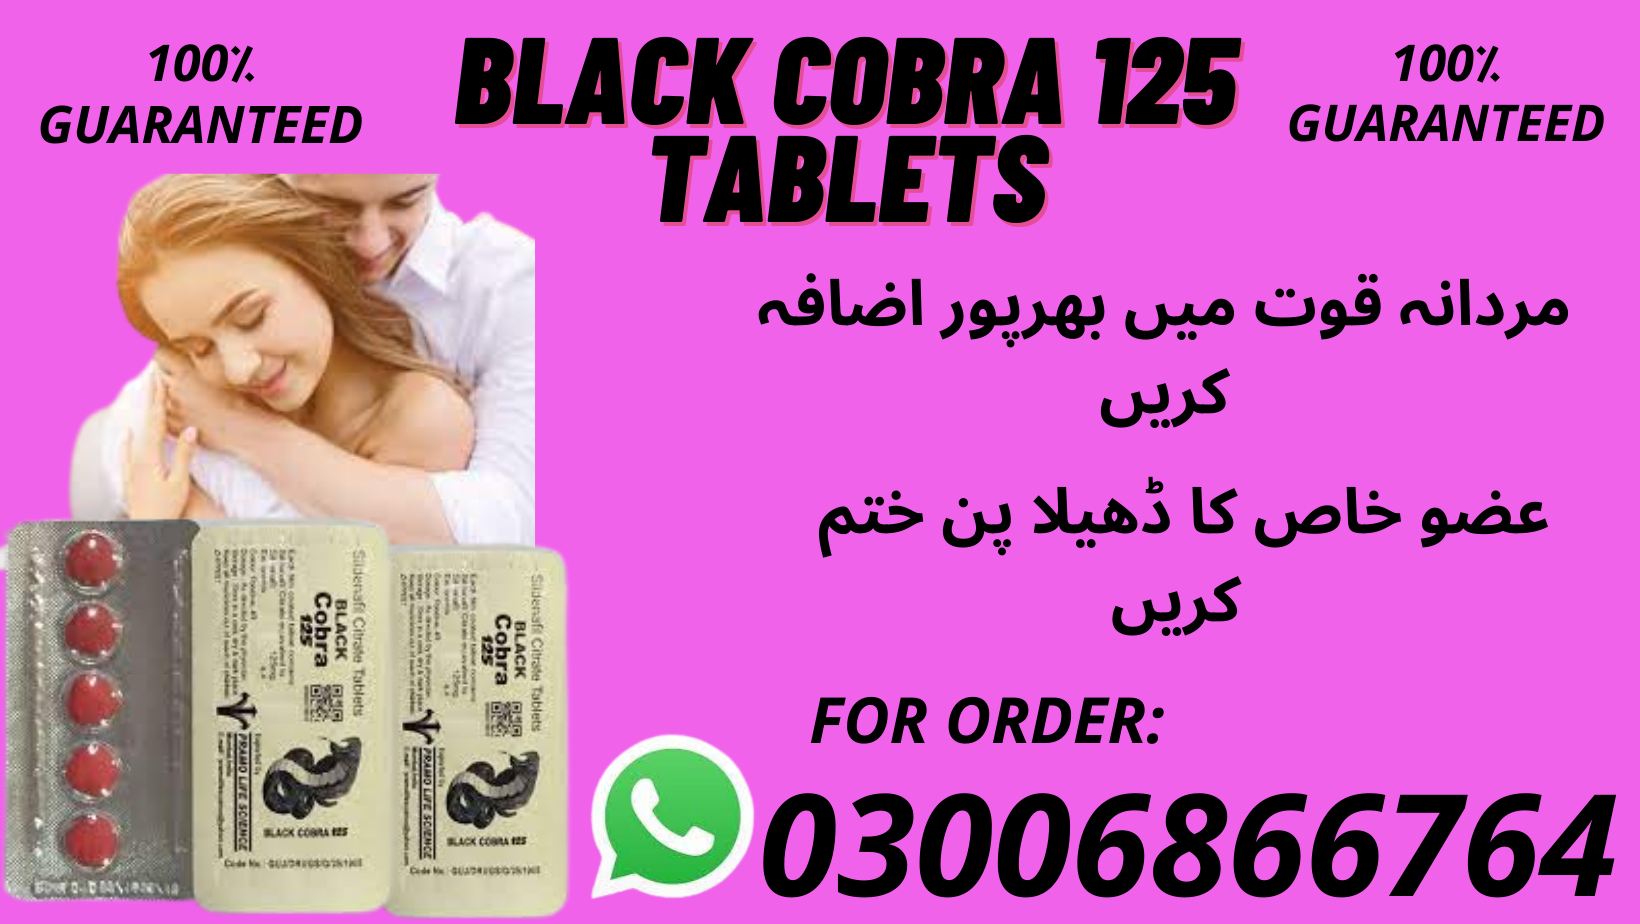 Black Cobra Tablets In Pakistan | Free Images at Clker.com - vector clip  art online, royalty free & public domain